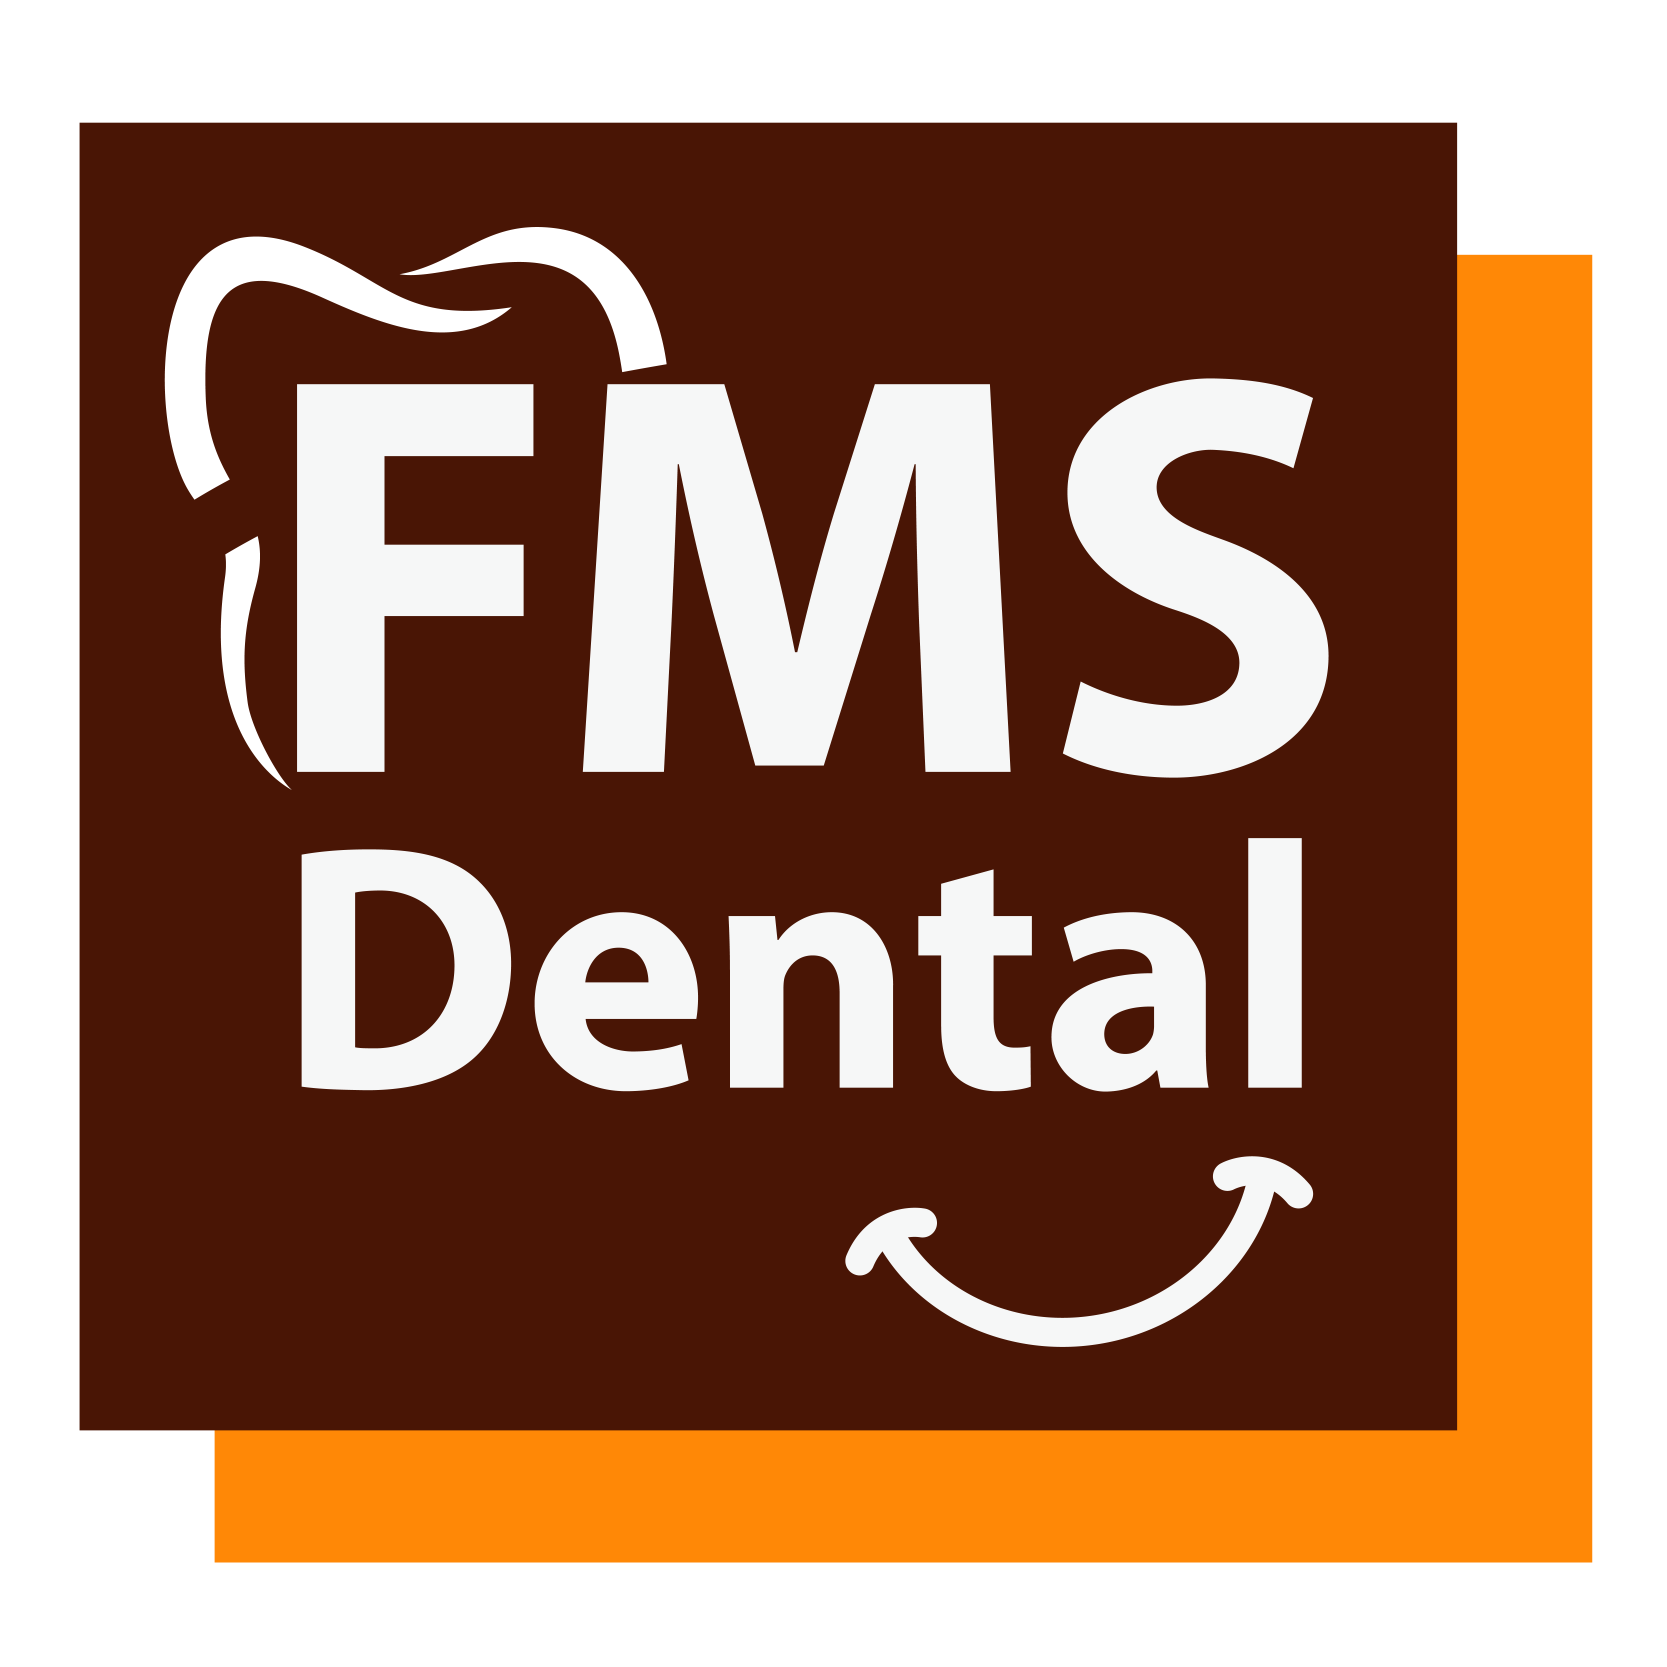 FMS Dental International Center|Hospitals|Medical Services